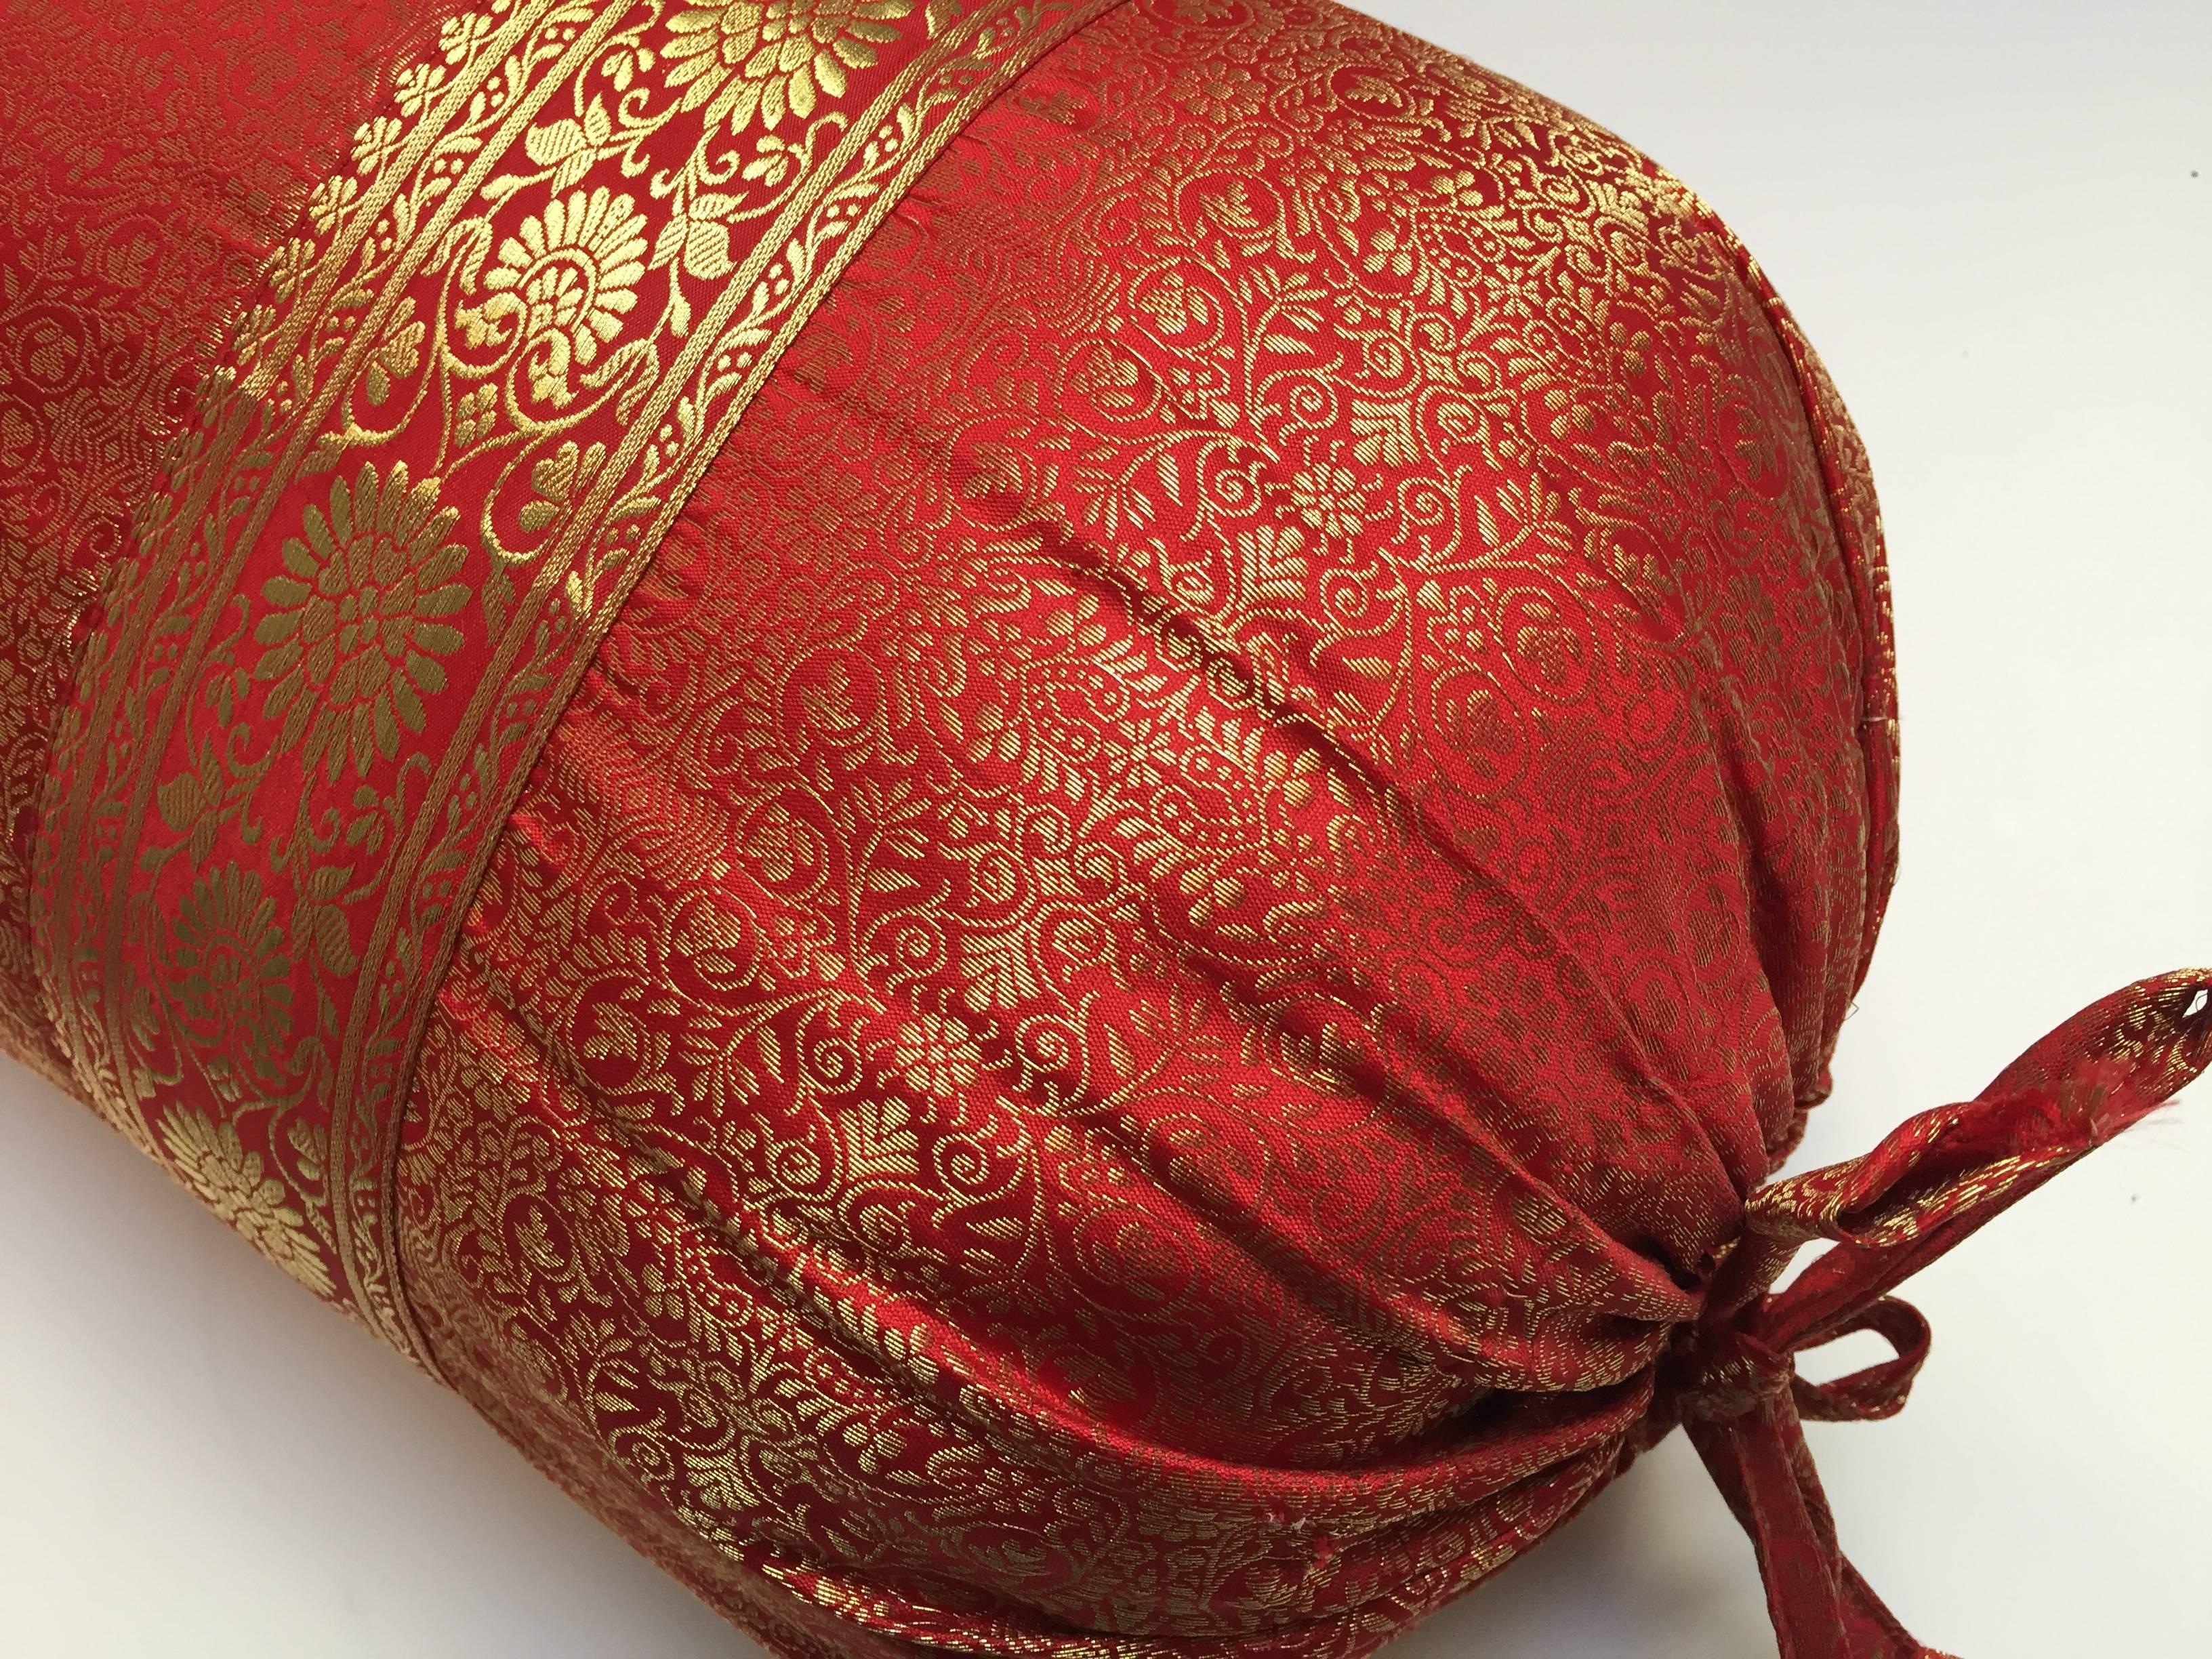 Pair of Large Silk Bolster Pillows Made from Vintage Wedding Silk Saris 1